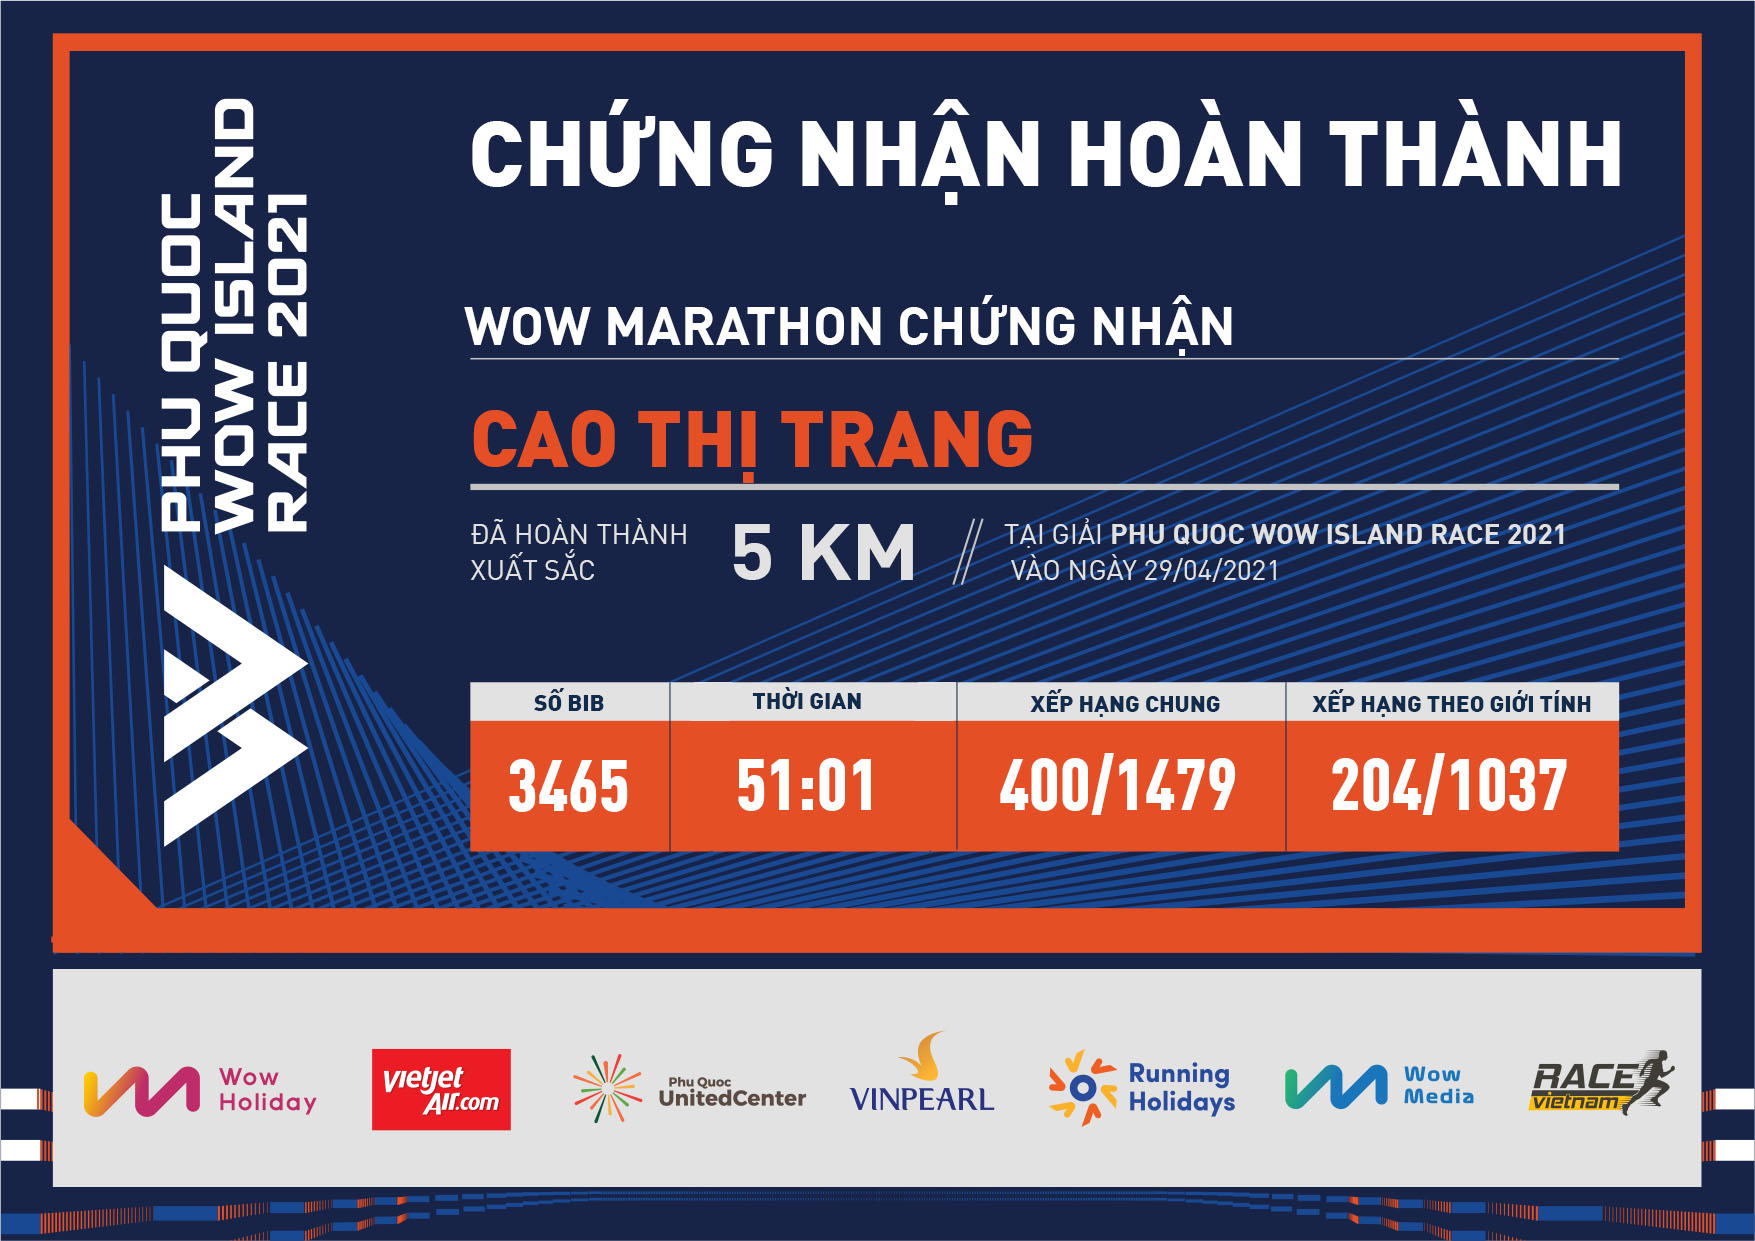 3465 - Cao Thị Trang